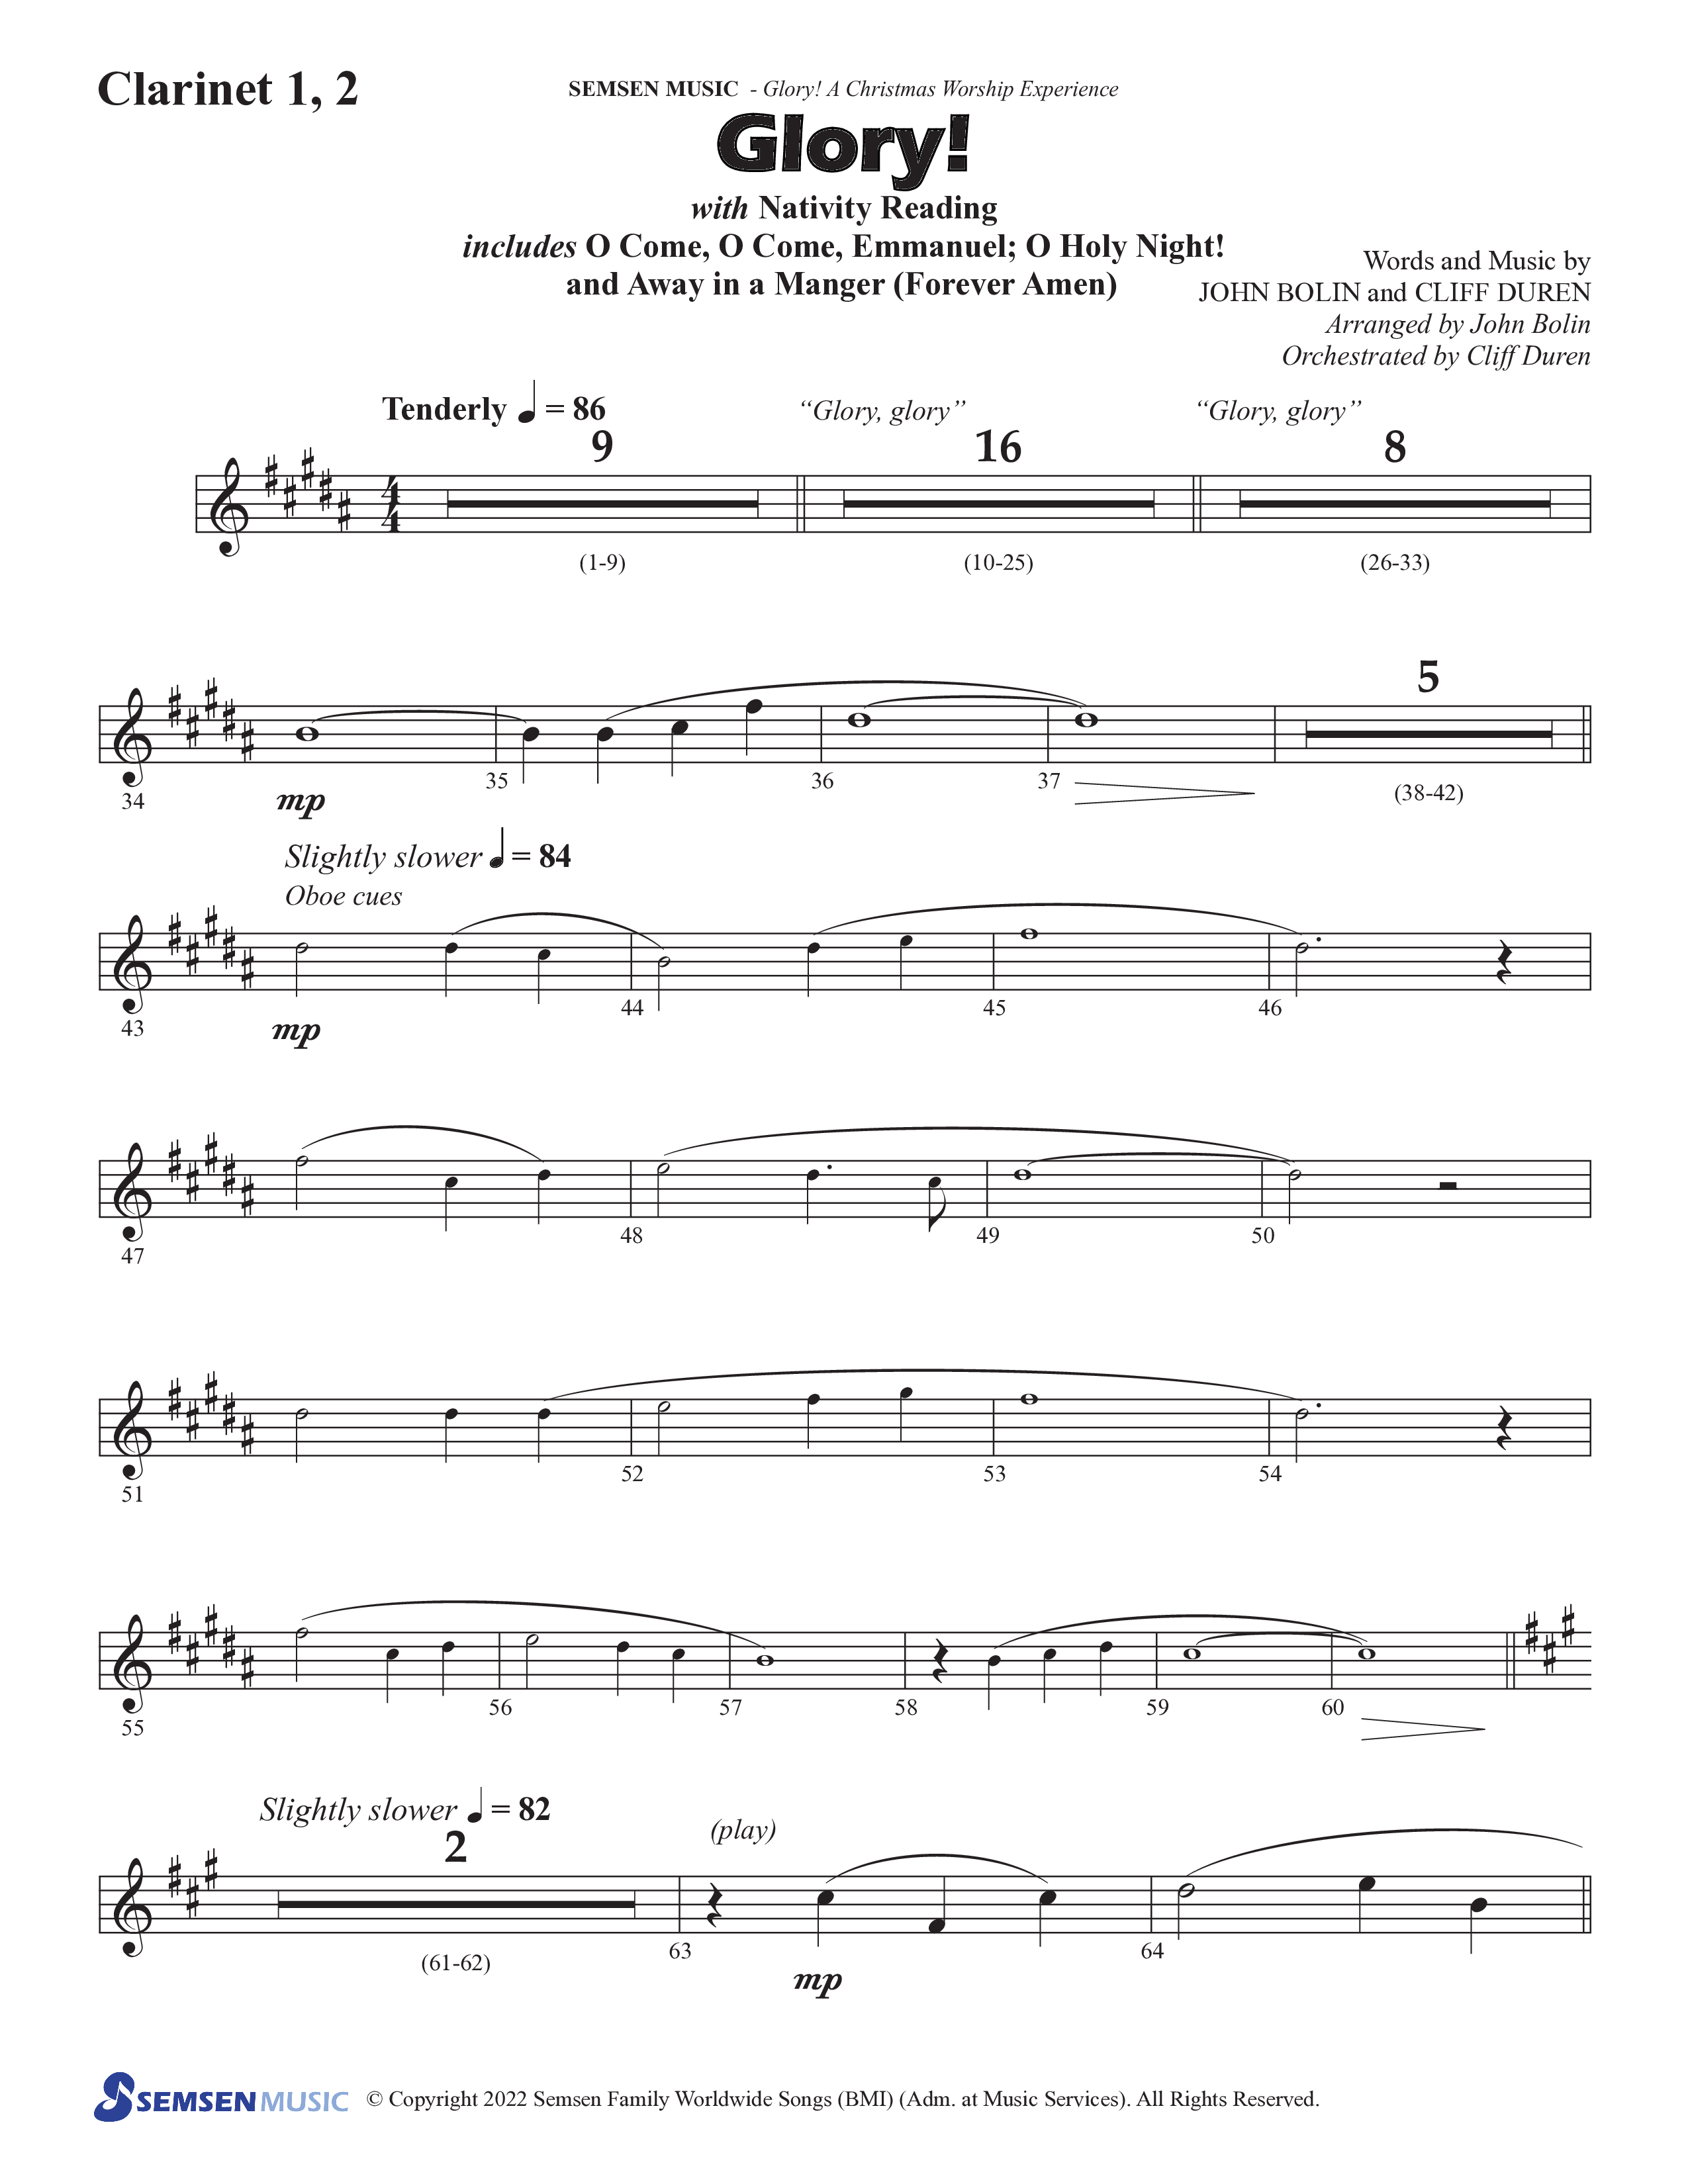 Glory: A Christmas Worship Experience (Choral Anthem SATB) Clarinet 1/2 (Semsen Music / Arr. John Bolin / Orch. Cliff Duren)